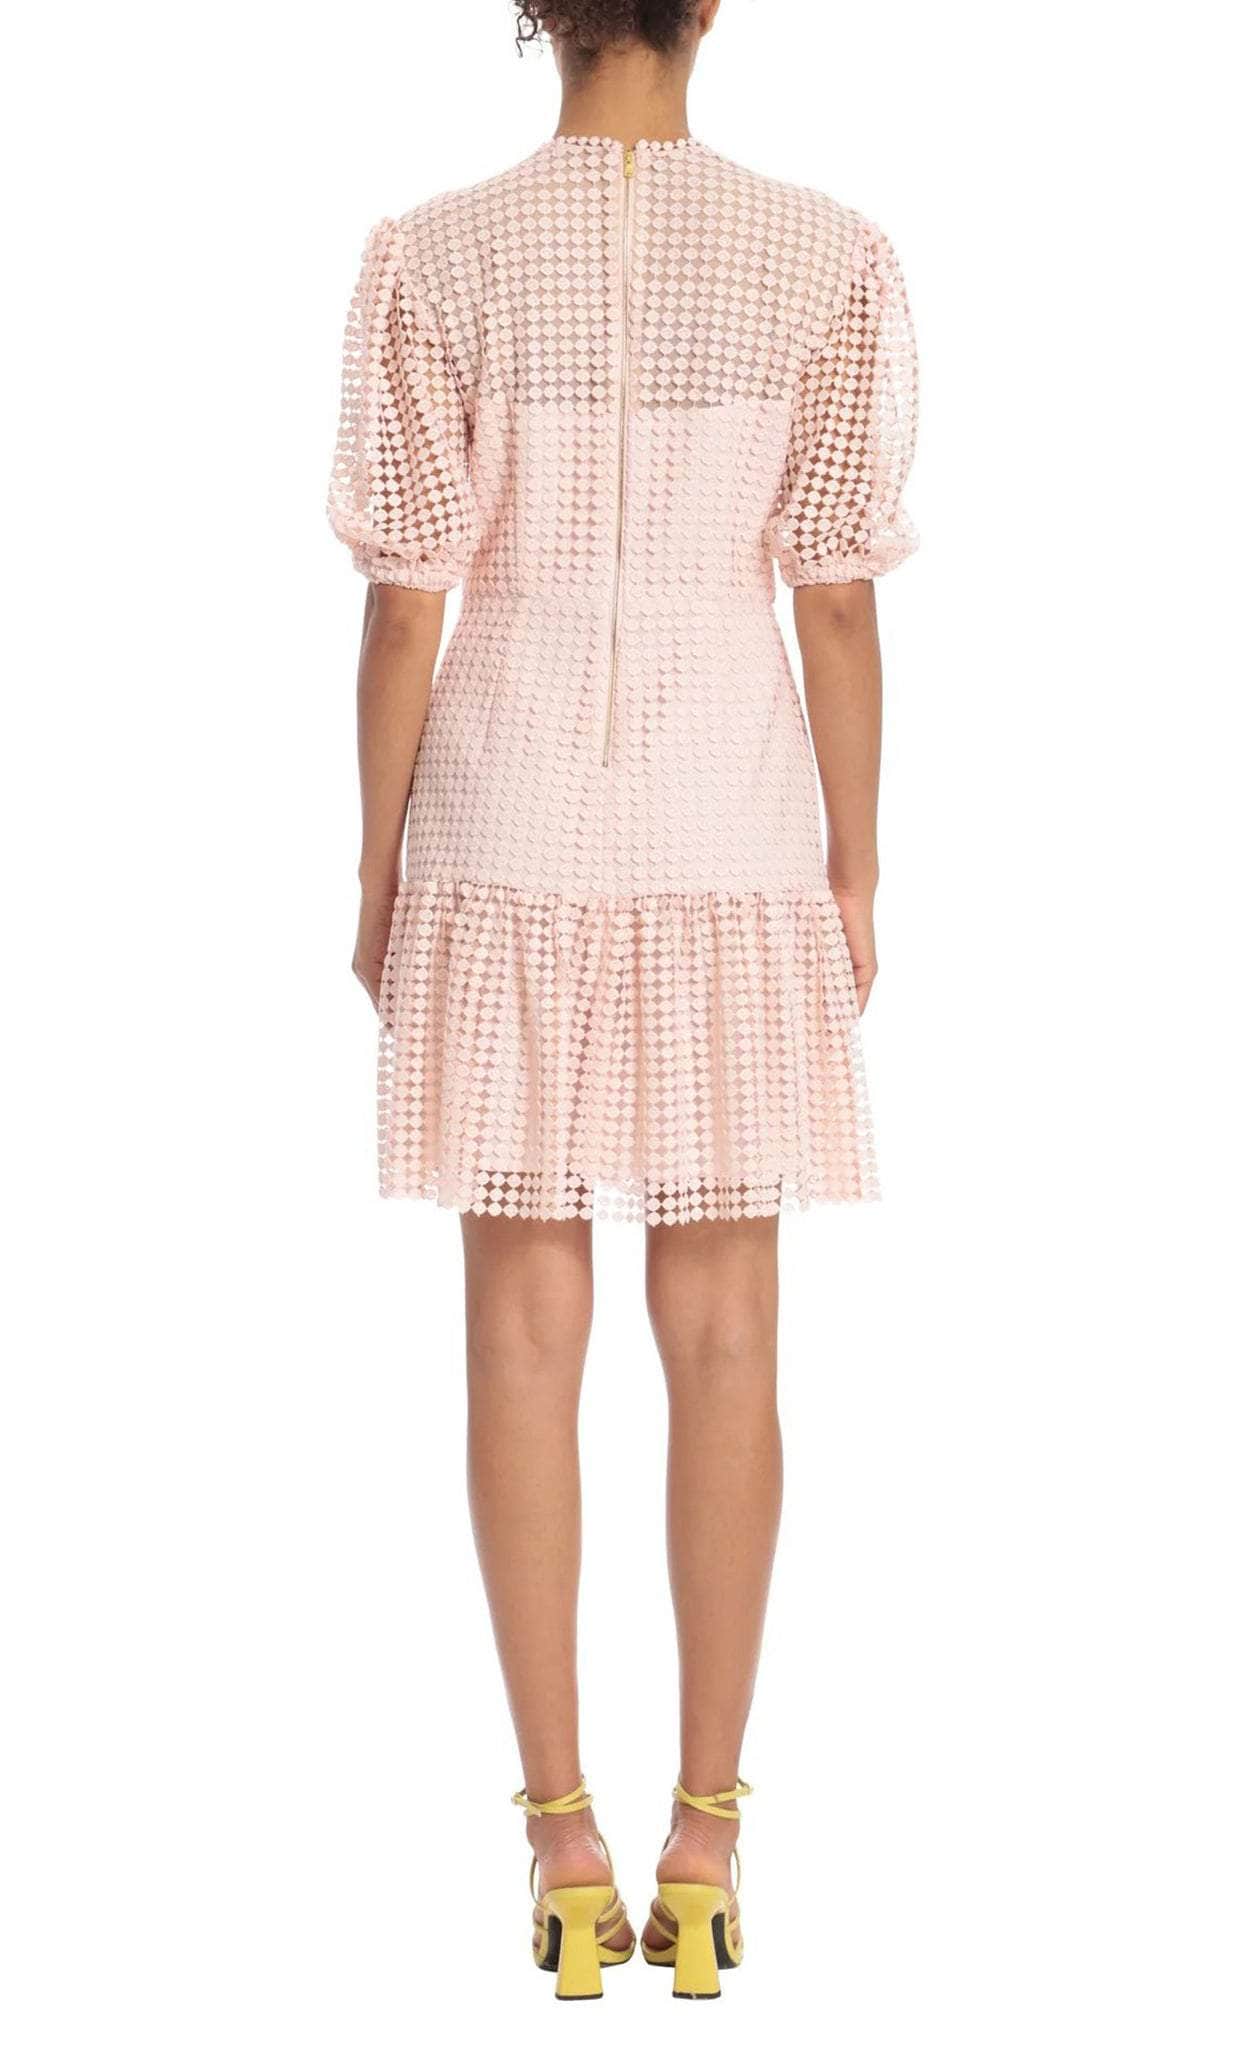 Donna Morgan D8047M - Puff Sleeve Lace Short Dress Party Dresses